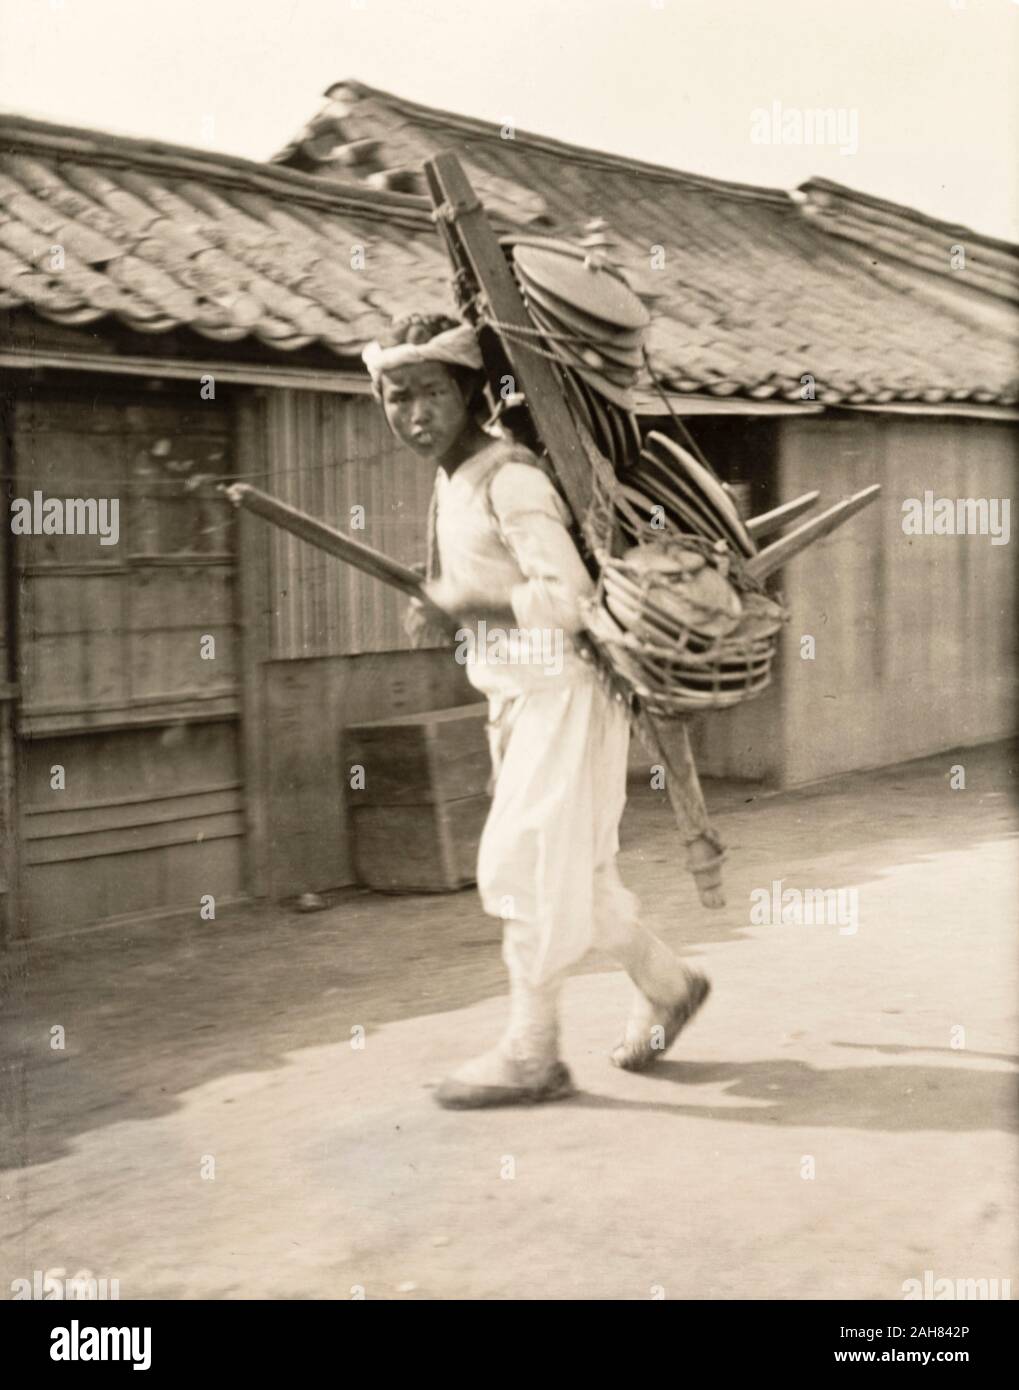 South Korea, A Korean peddler boy carries his wares, probably crockery of some kind, on a wooden frame strapped to his back. Original manuscript caption: Seoul, Korea - Boy coolie - peddlar, circa 1920. 1998/028/1/1/239. Stock Photo